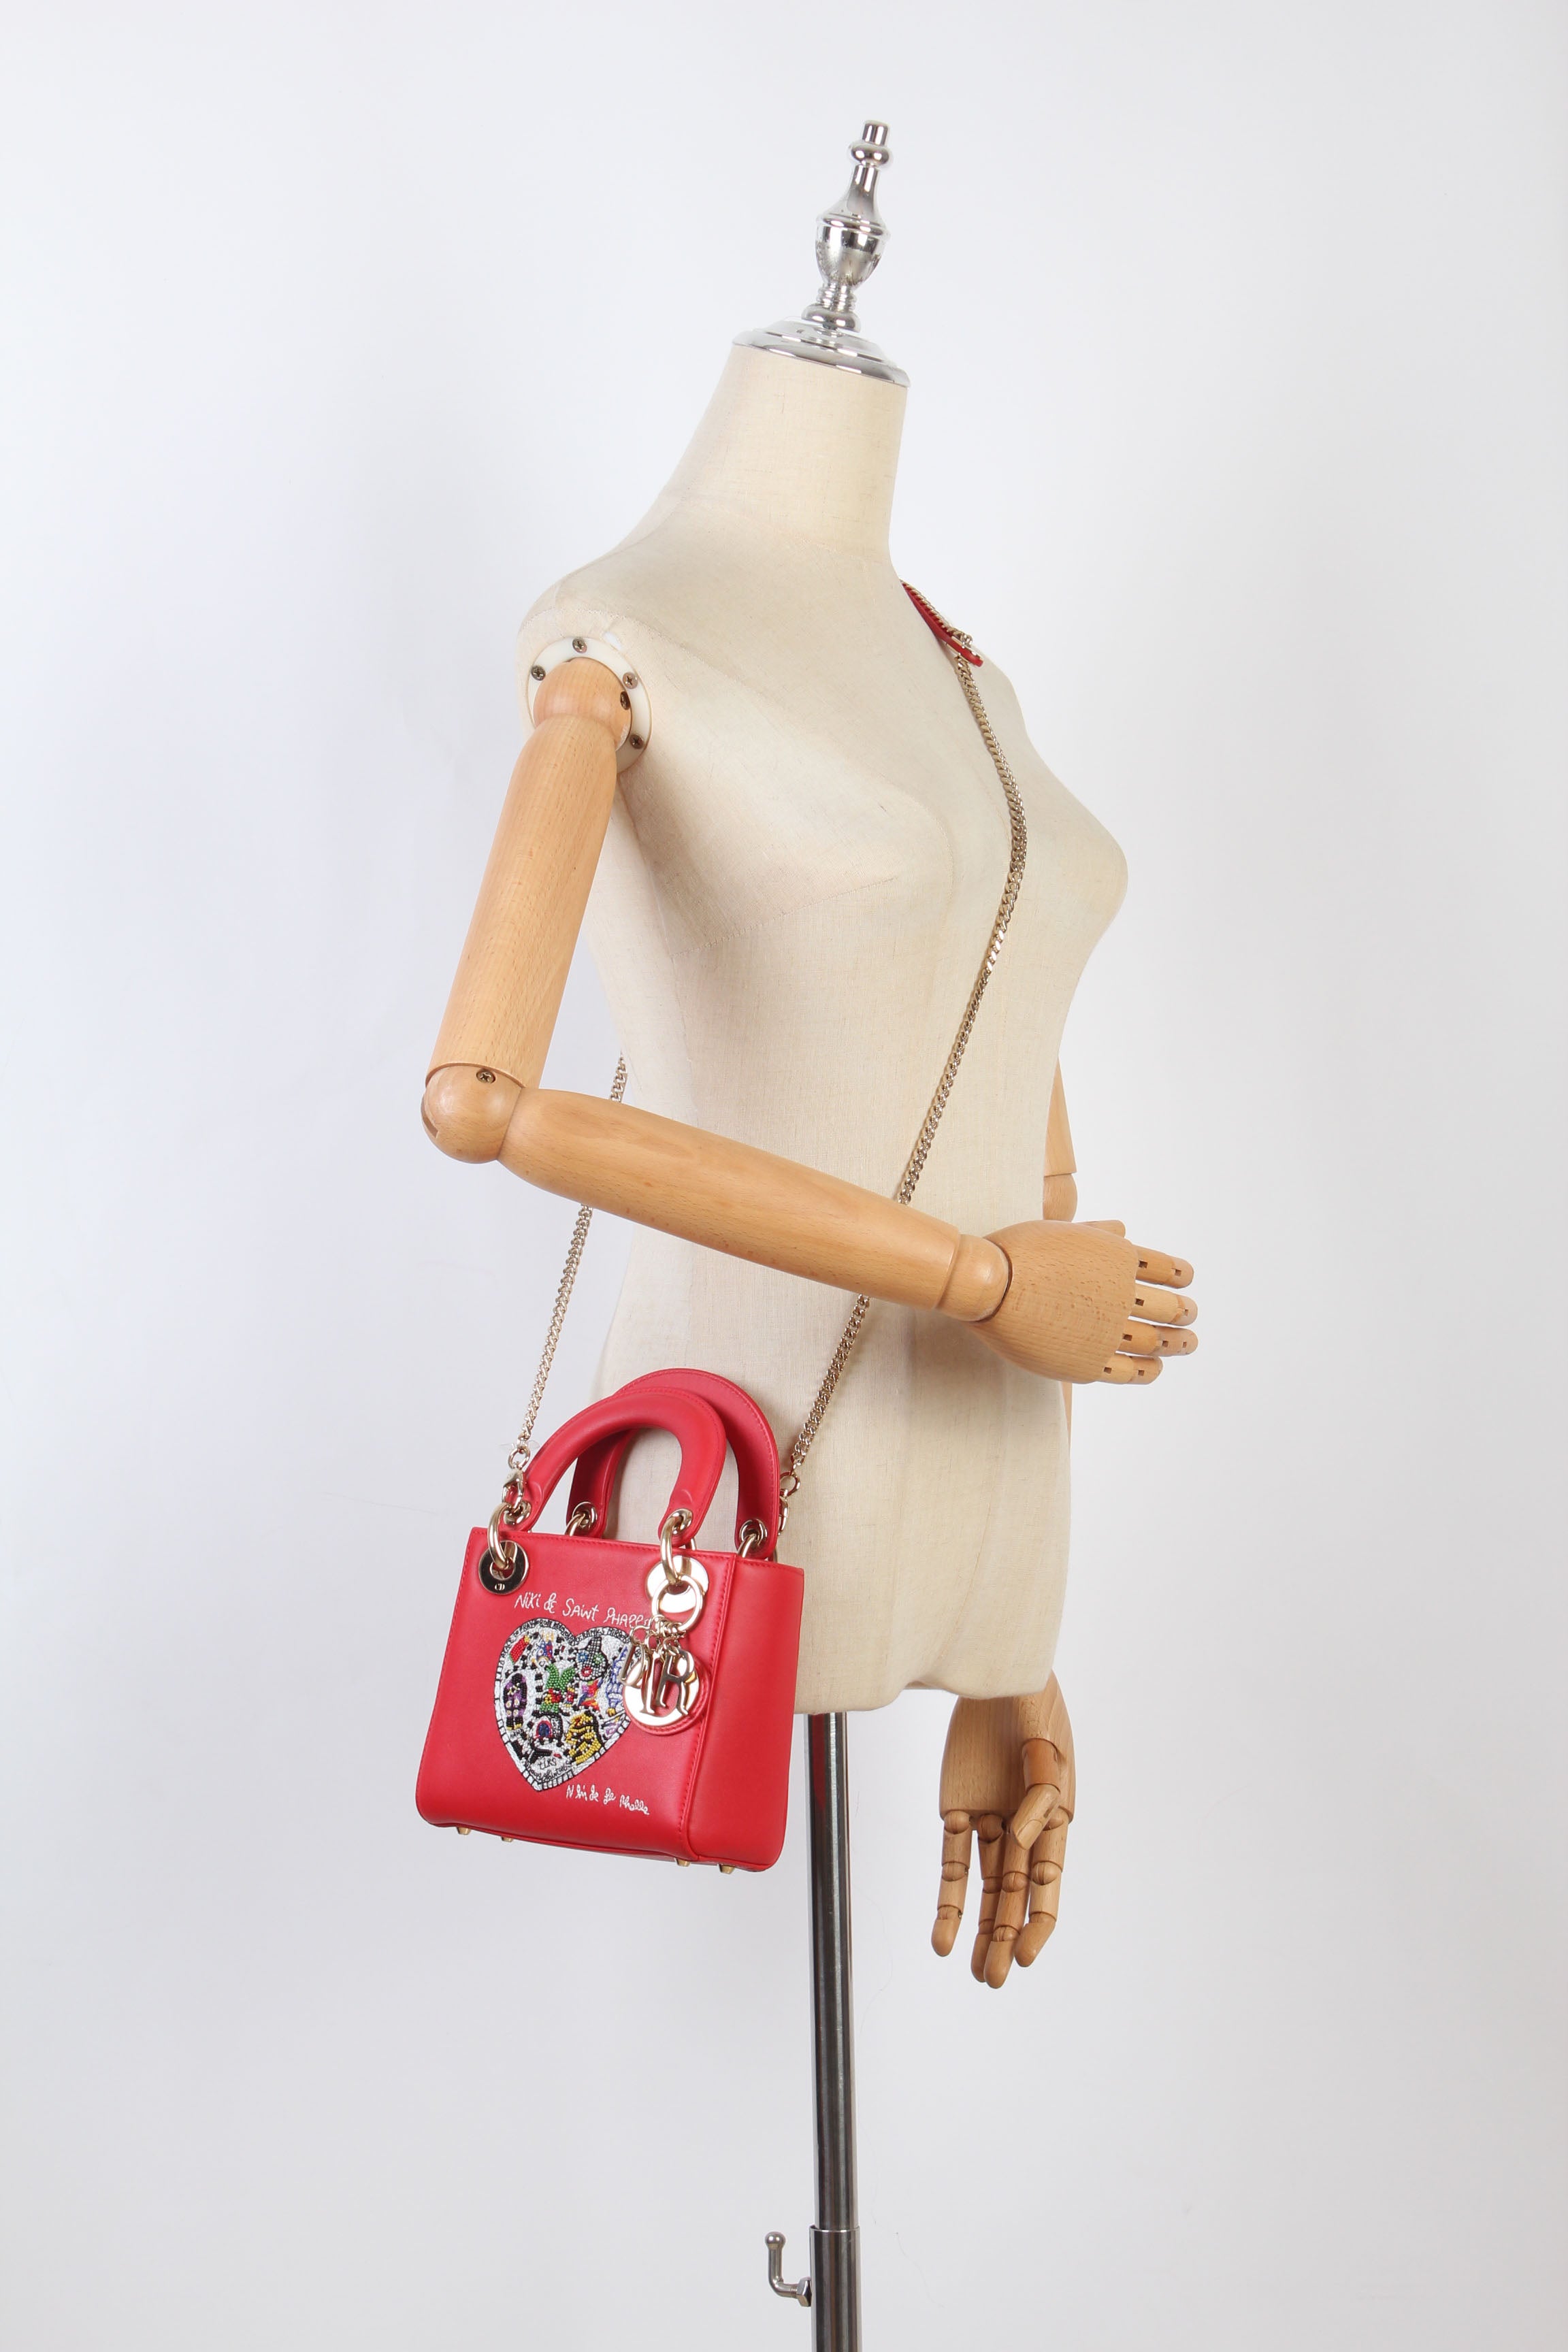 Christian Dior Niki de Saint Phalle Medium Lady Dior Bag